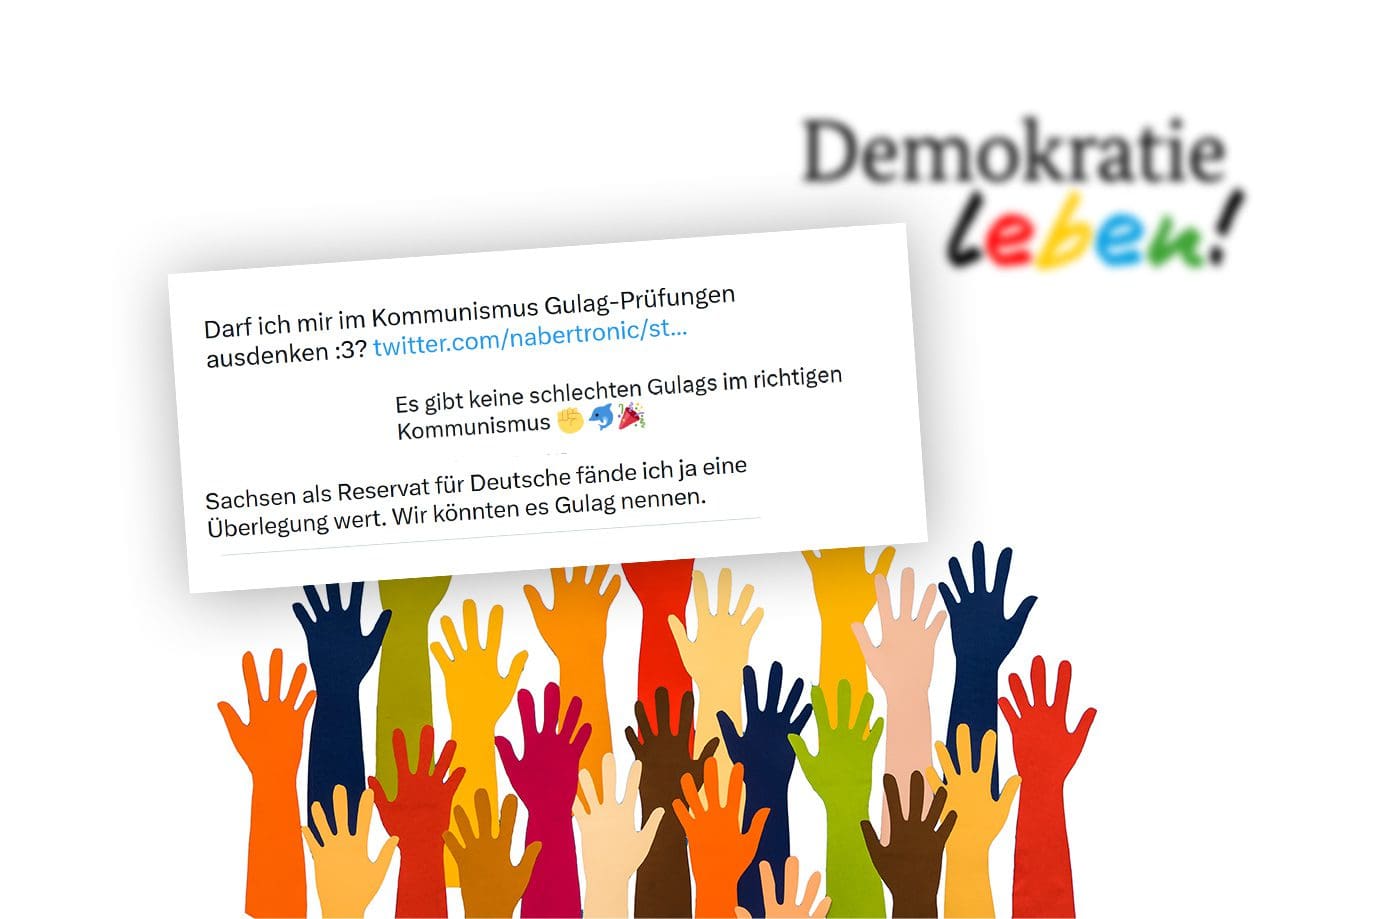 programm-„demokratie-leben!“:-gelder-fuer-hass-gegen-deutsche